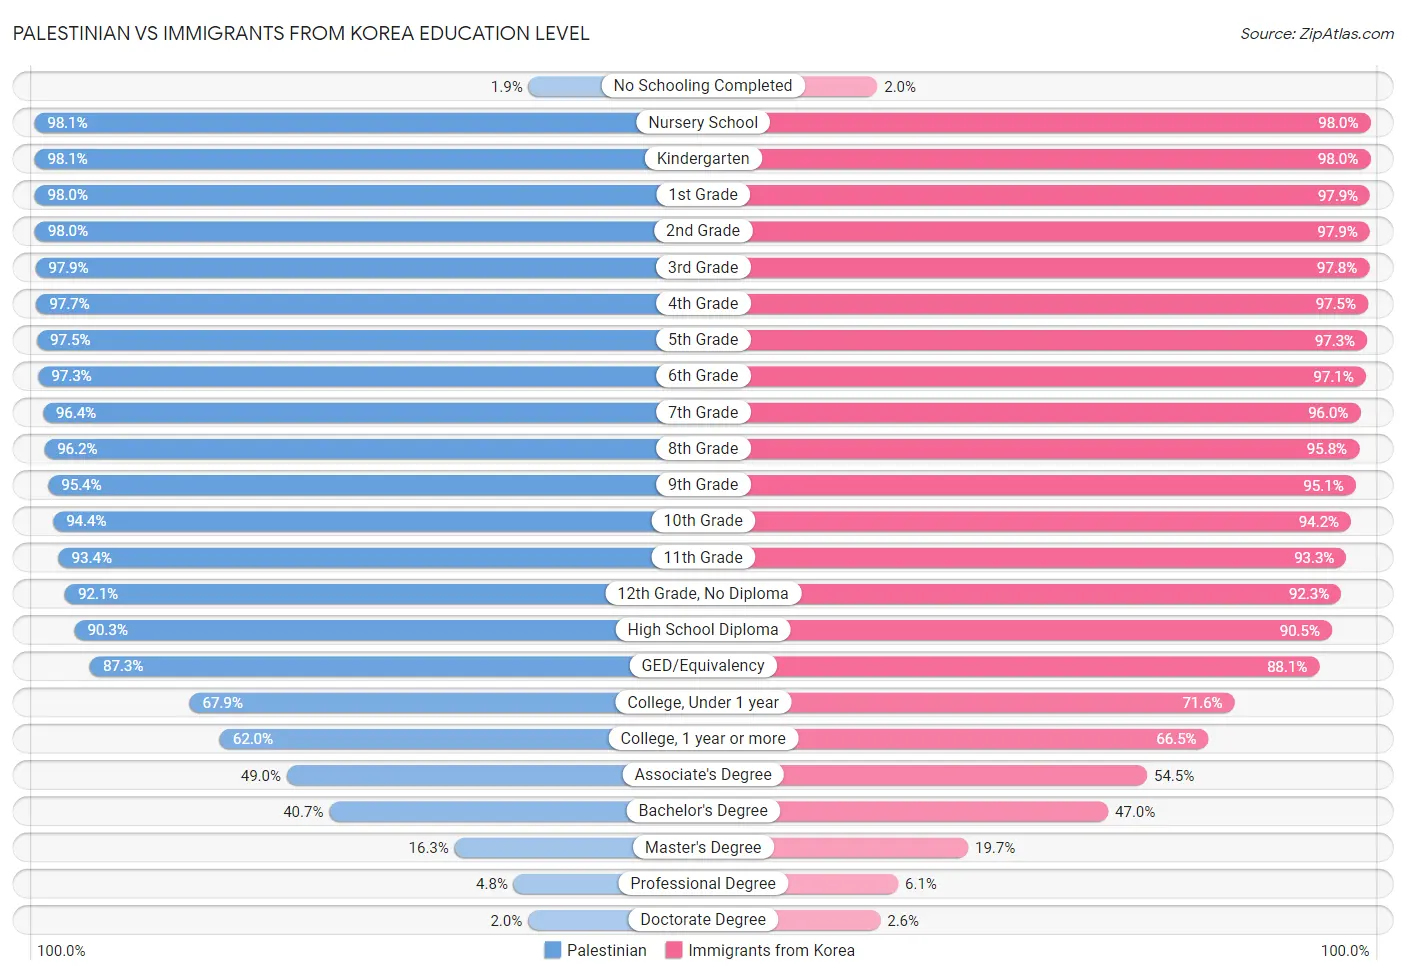 Palestinian vs Immigrants from Korea Education Level